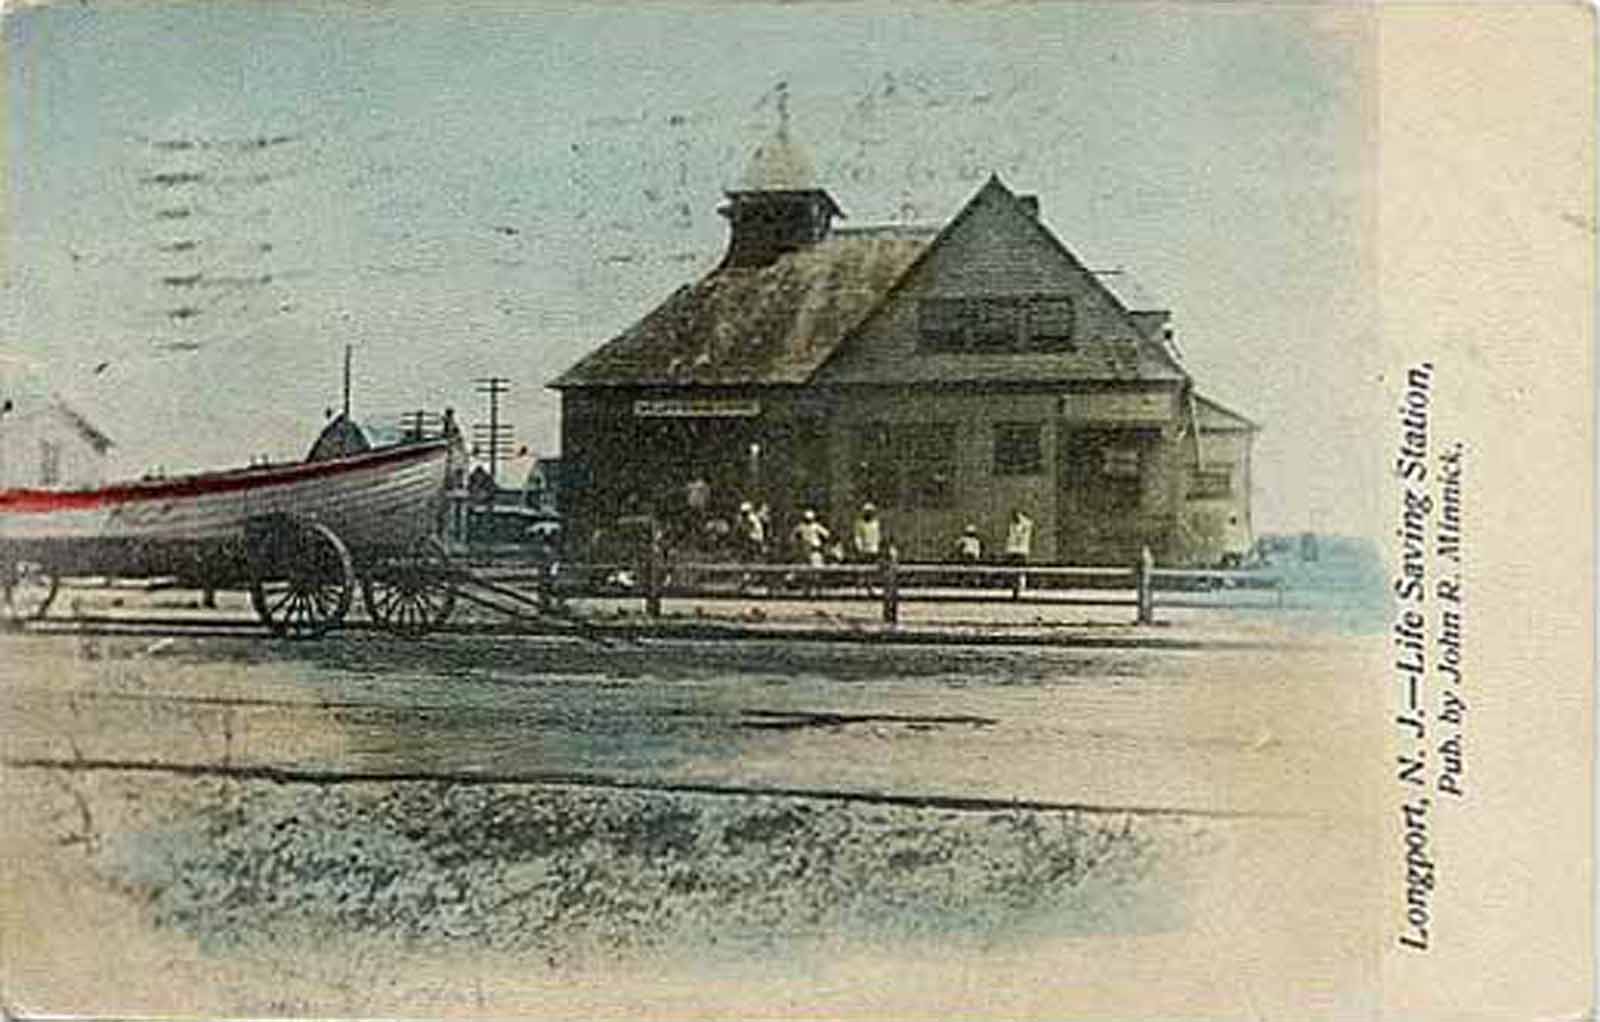 Longport - Lif Saving Station - 1908